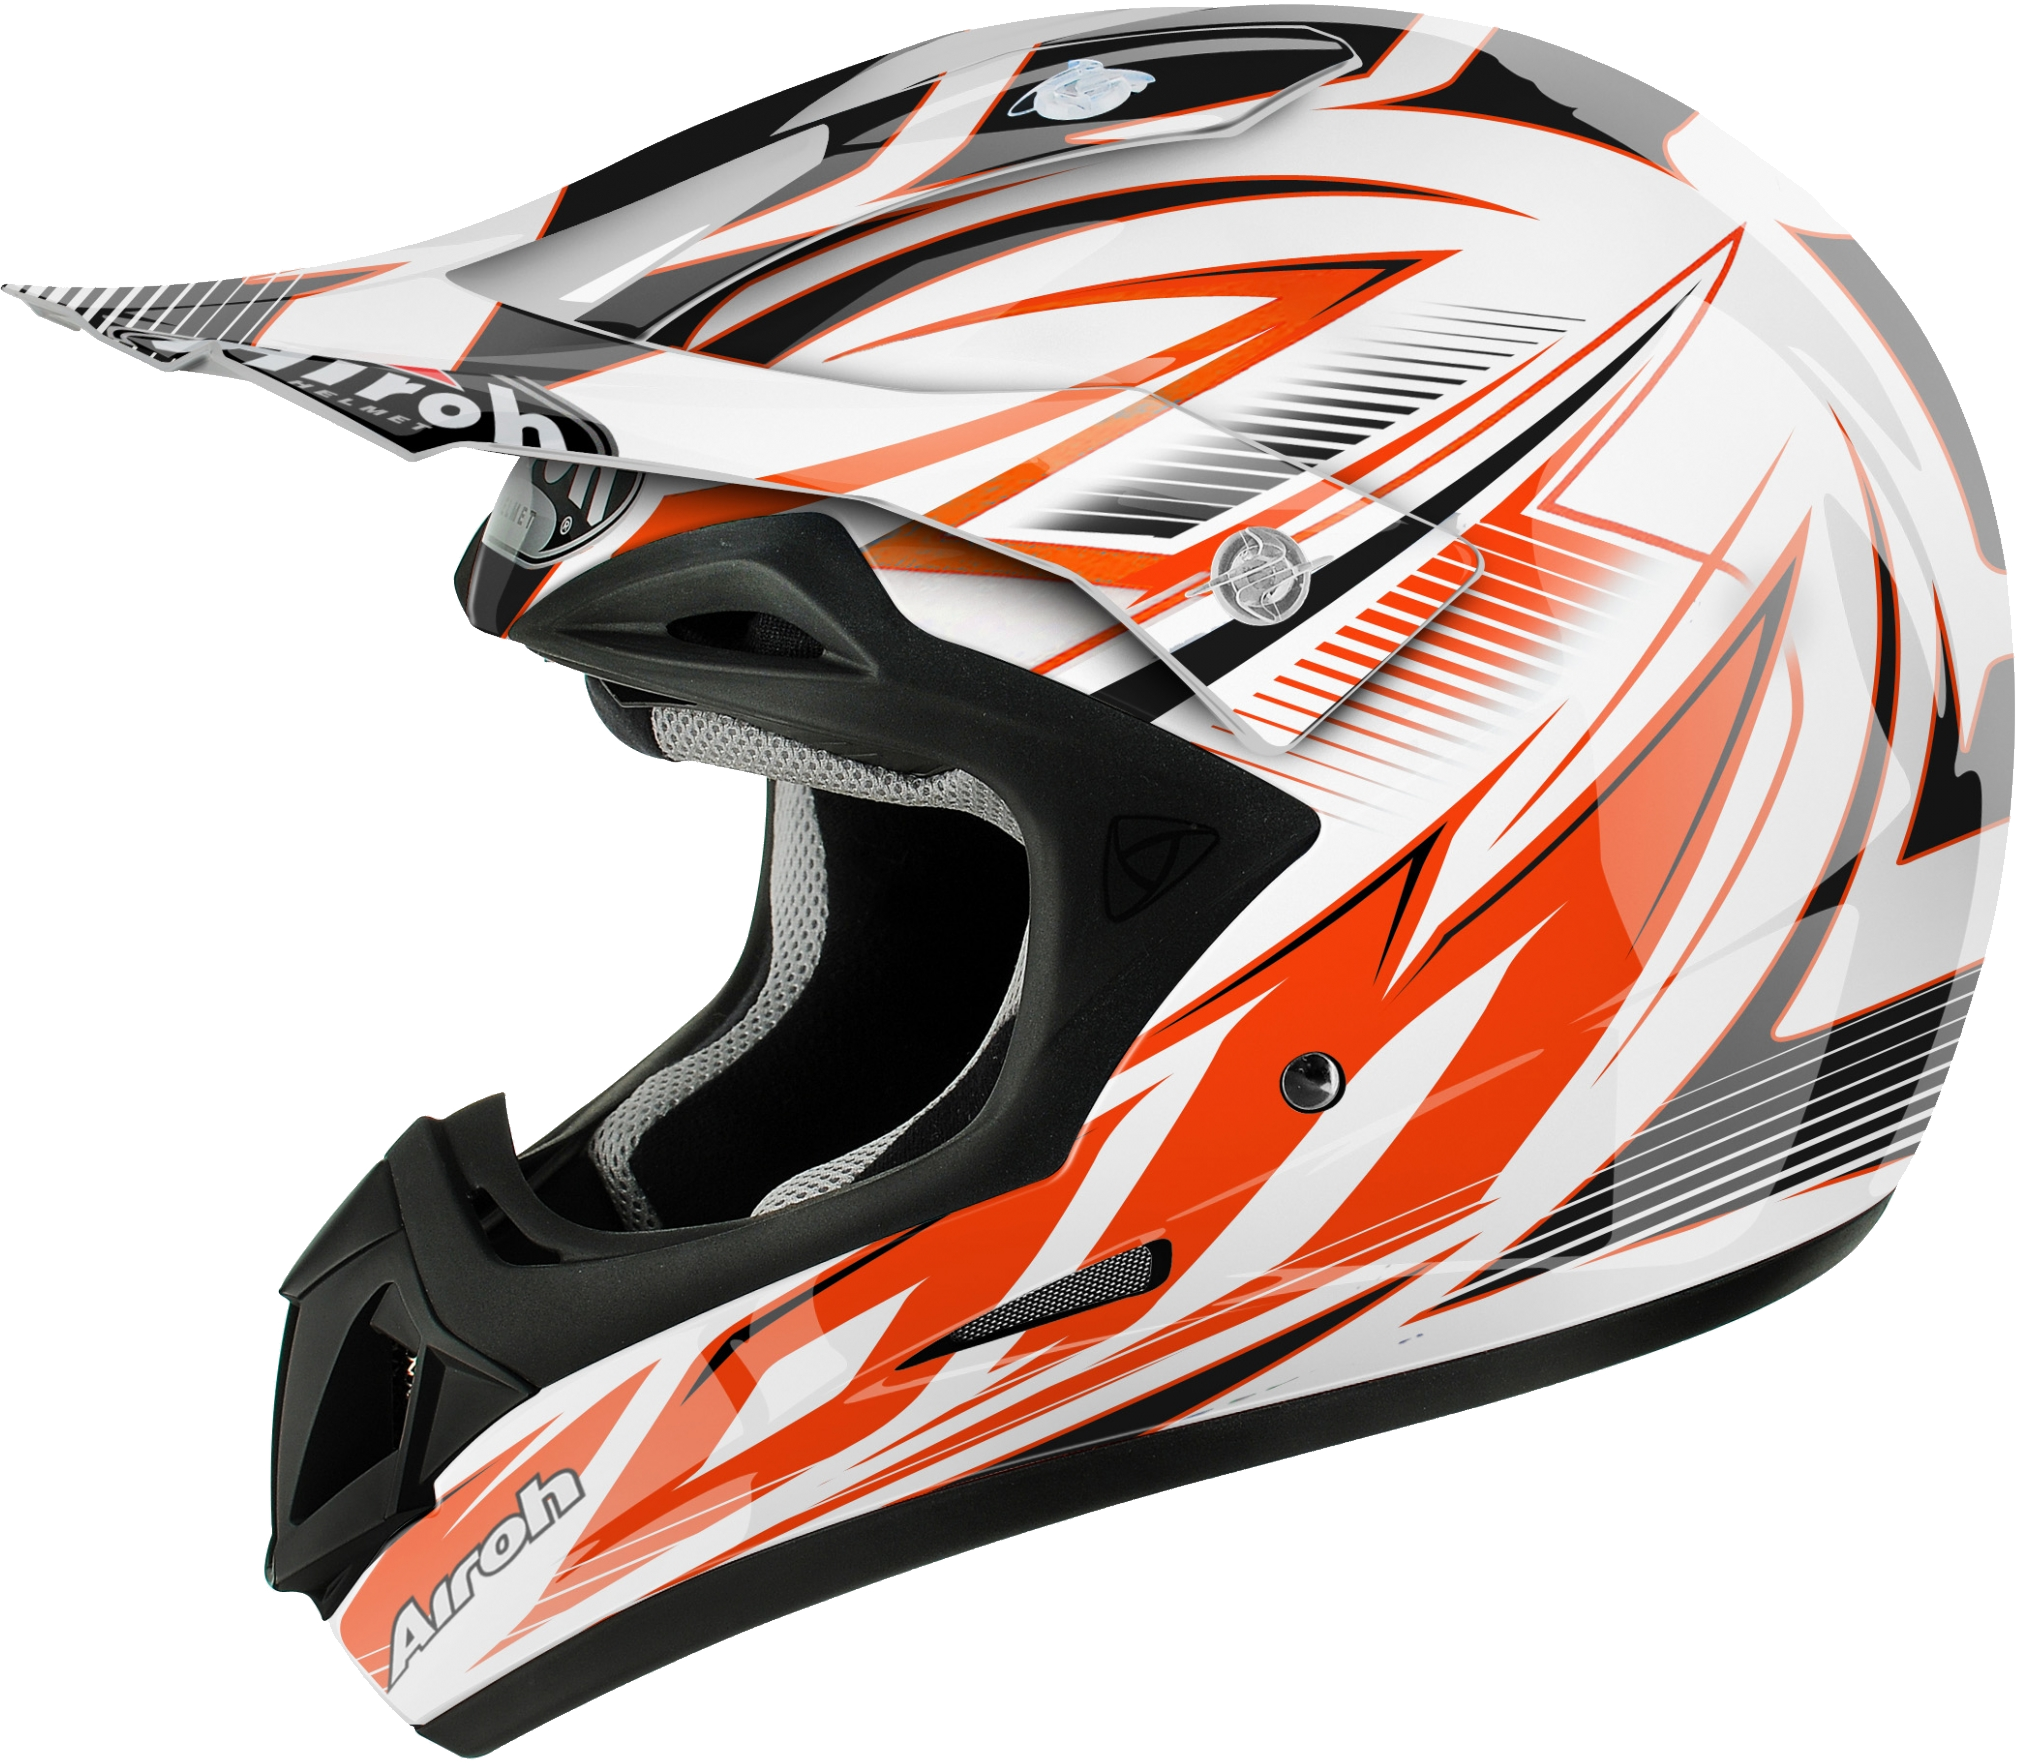 Full Face Bicycle Helmet Png Image - Bikehelmet, Transparent background PNG HD thumbnail